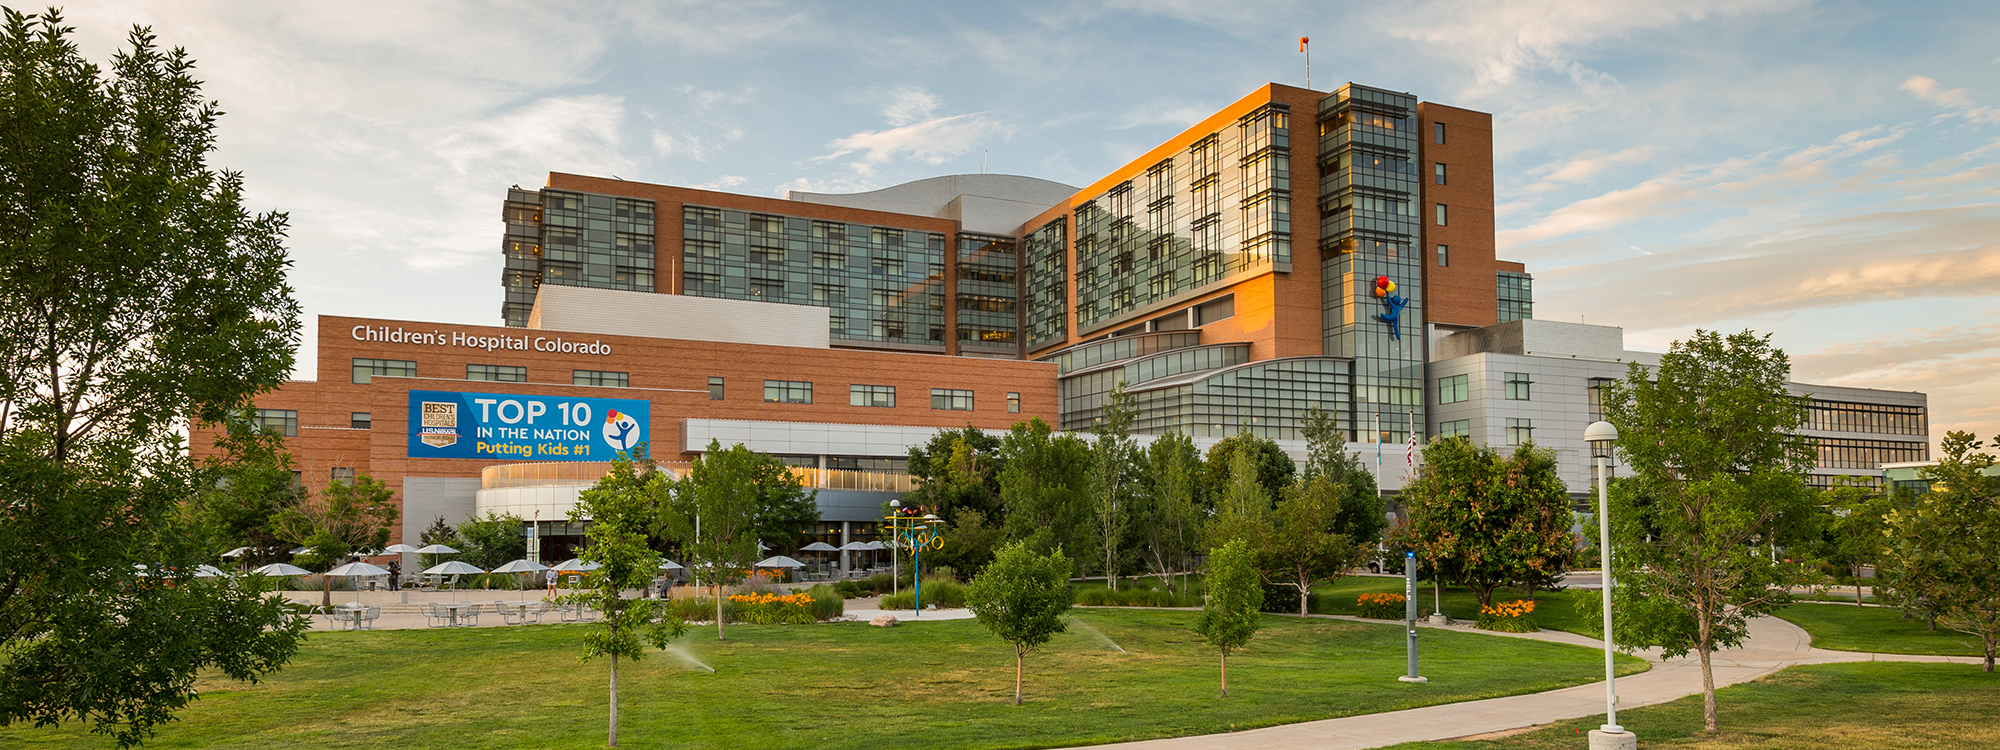 Children's Hospital Colorado - One of America's Best | Denver Relocation  Guide %